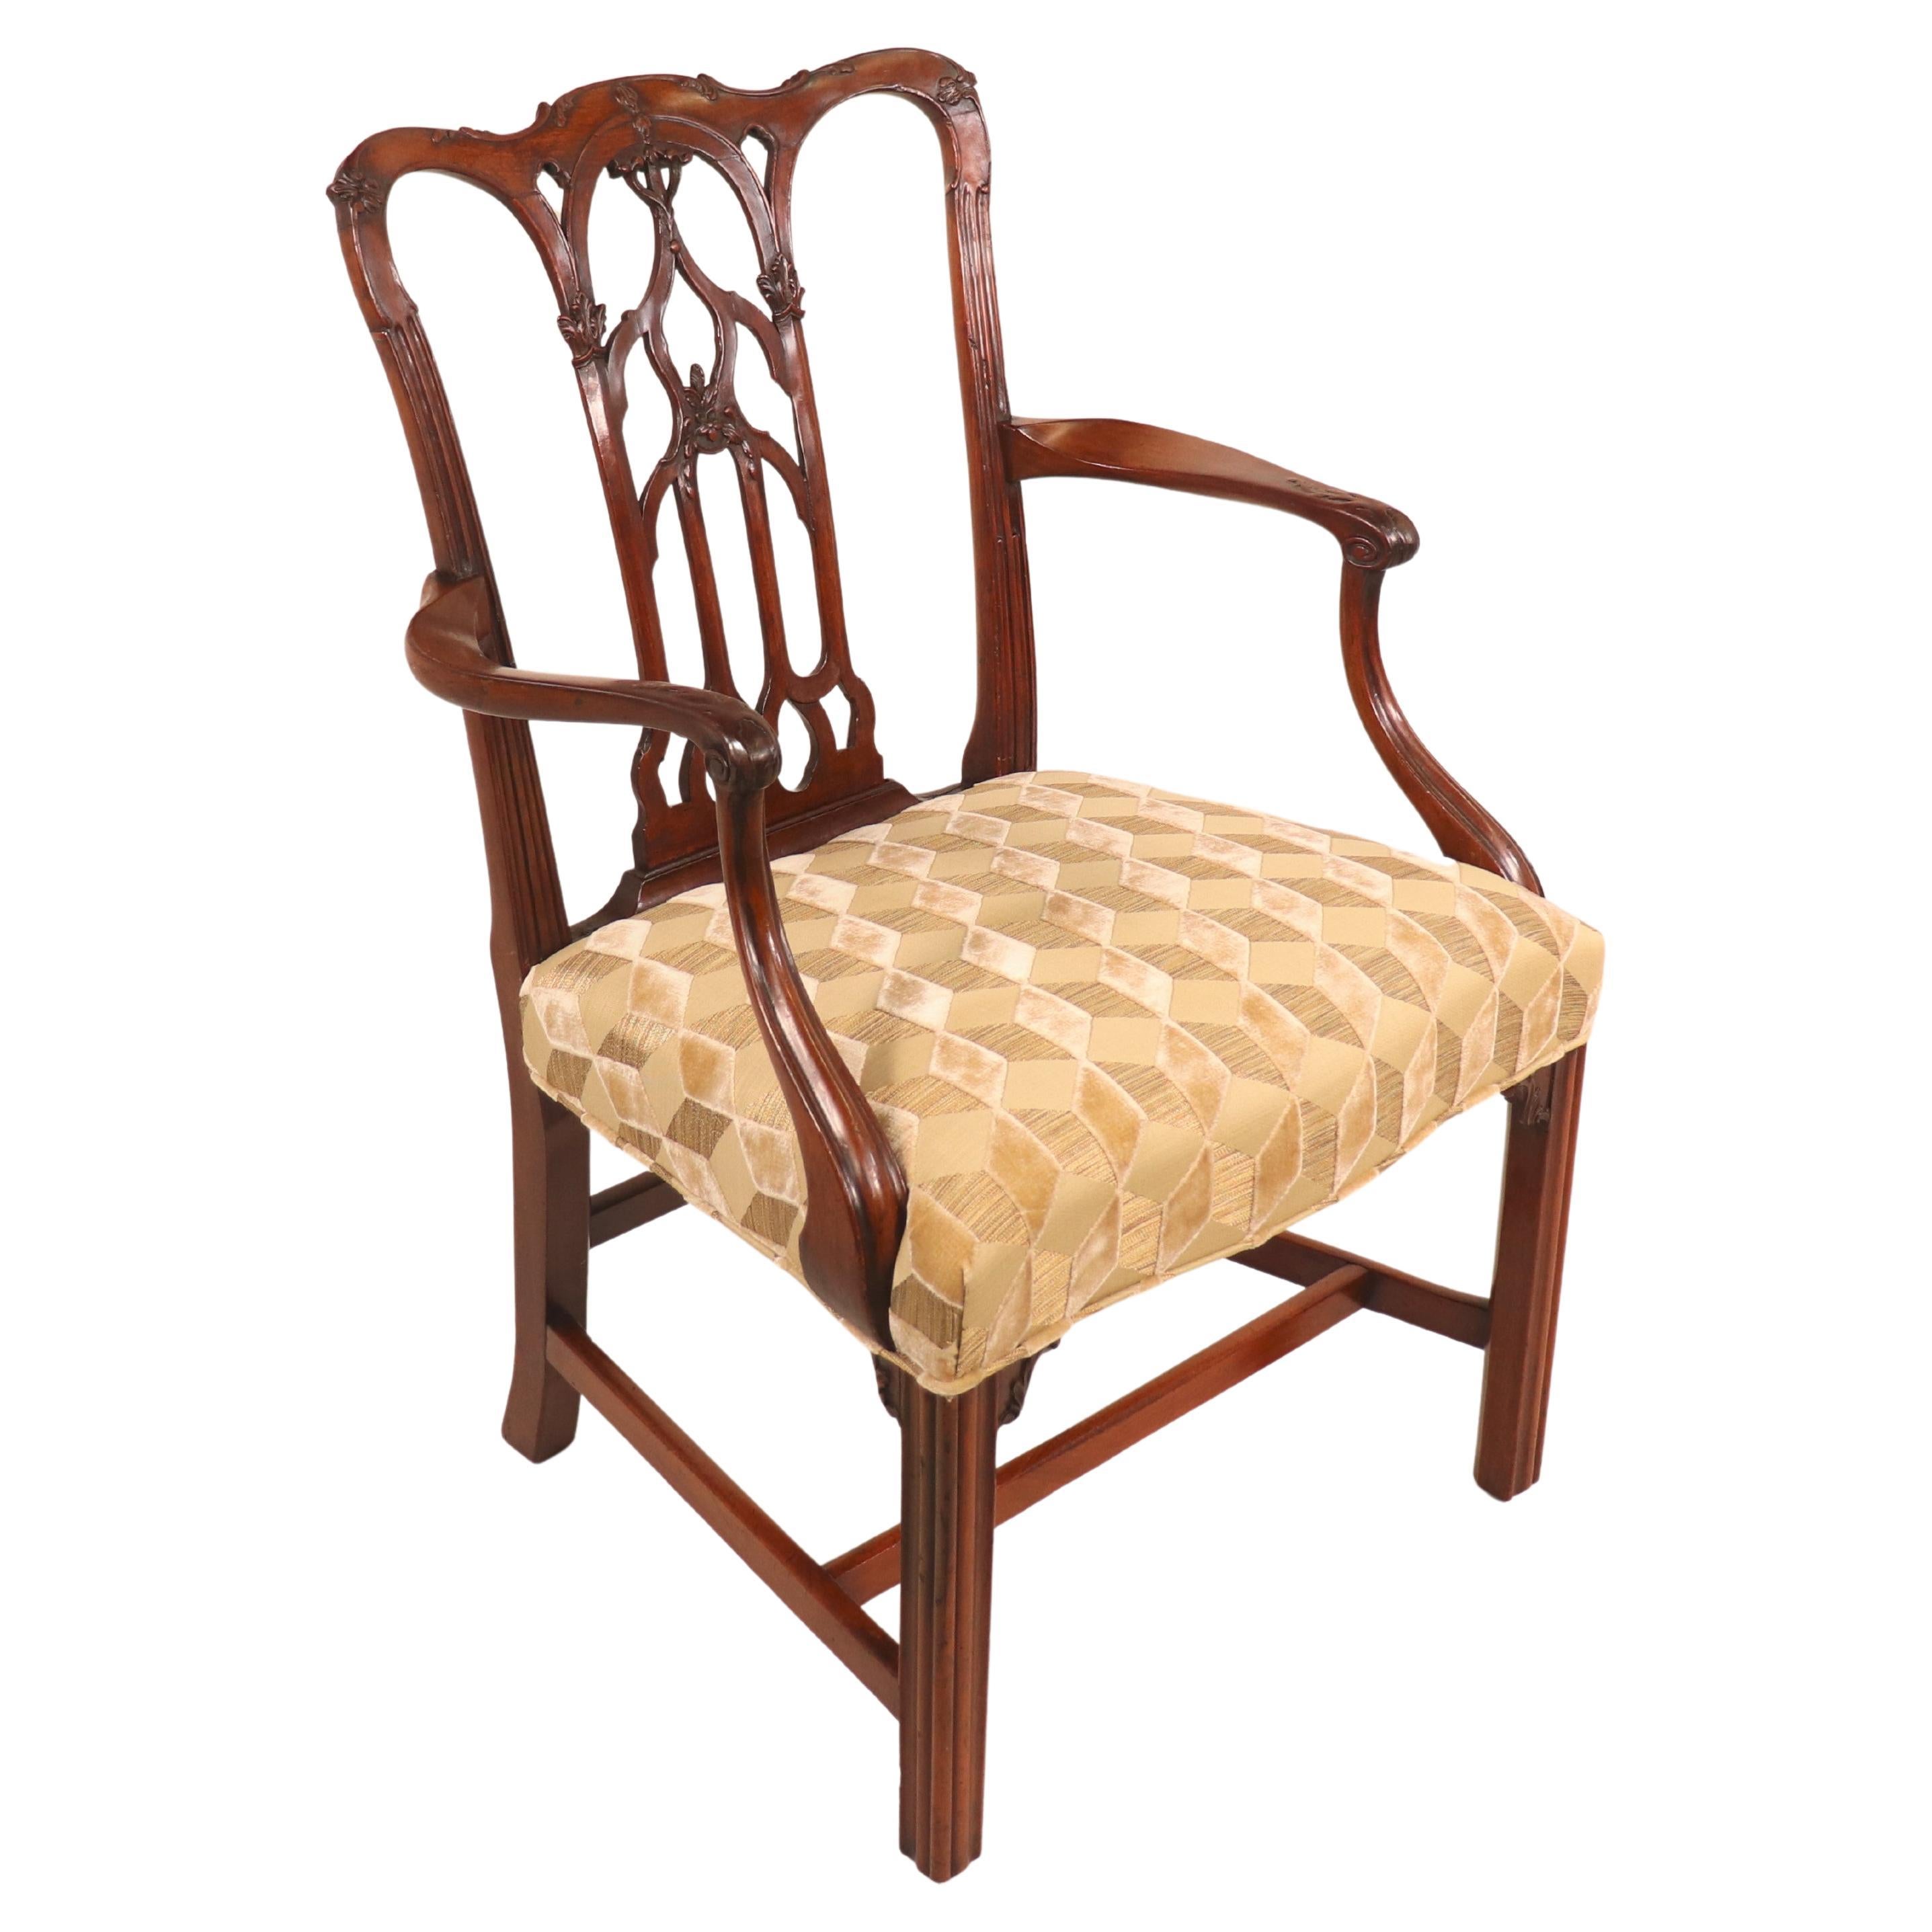 Circa 1750, English Georgian ii Period Mahogany Armchair with Modern Fabric For Sale